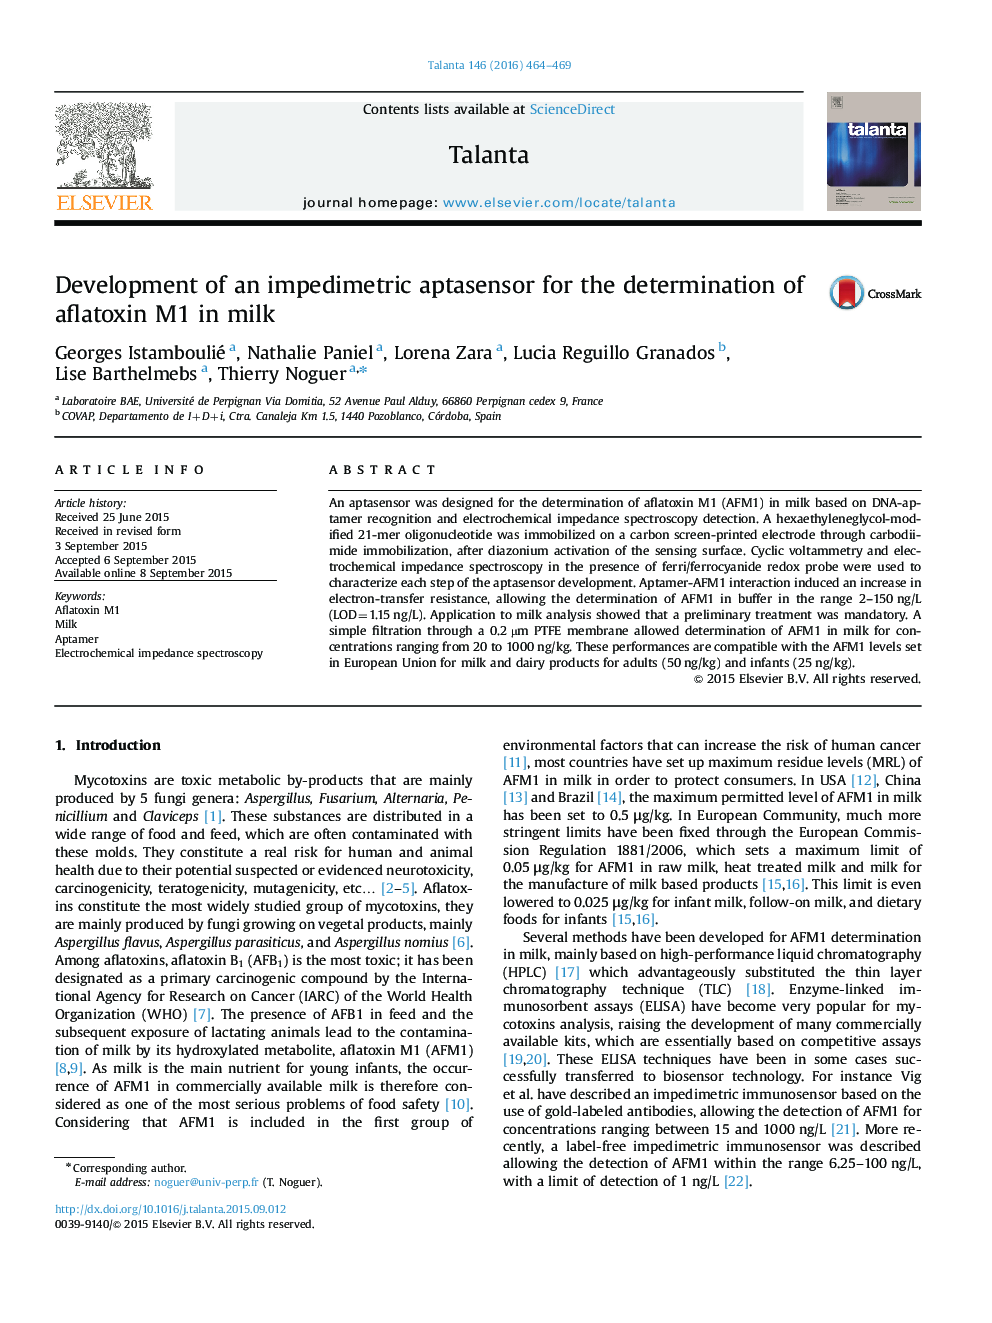 Development of an impedimetric aptasensor for the determination of aflatoxin M1 in milk